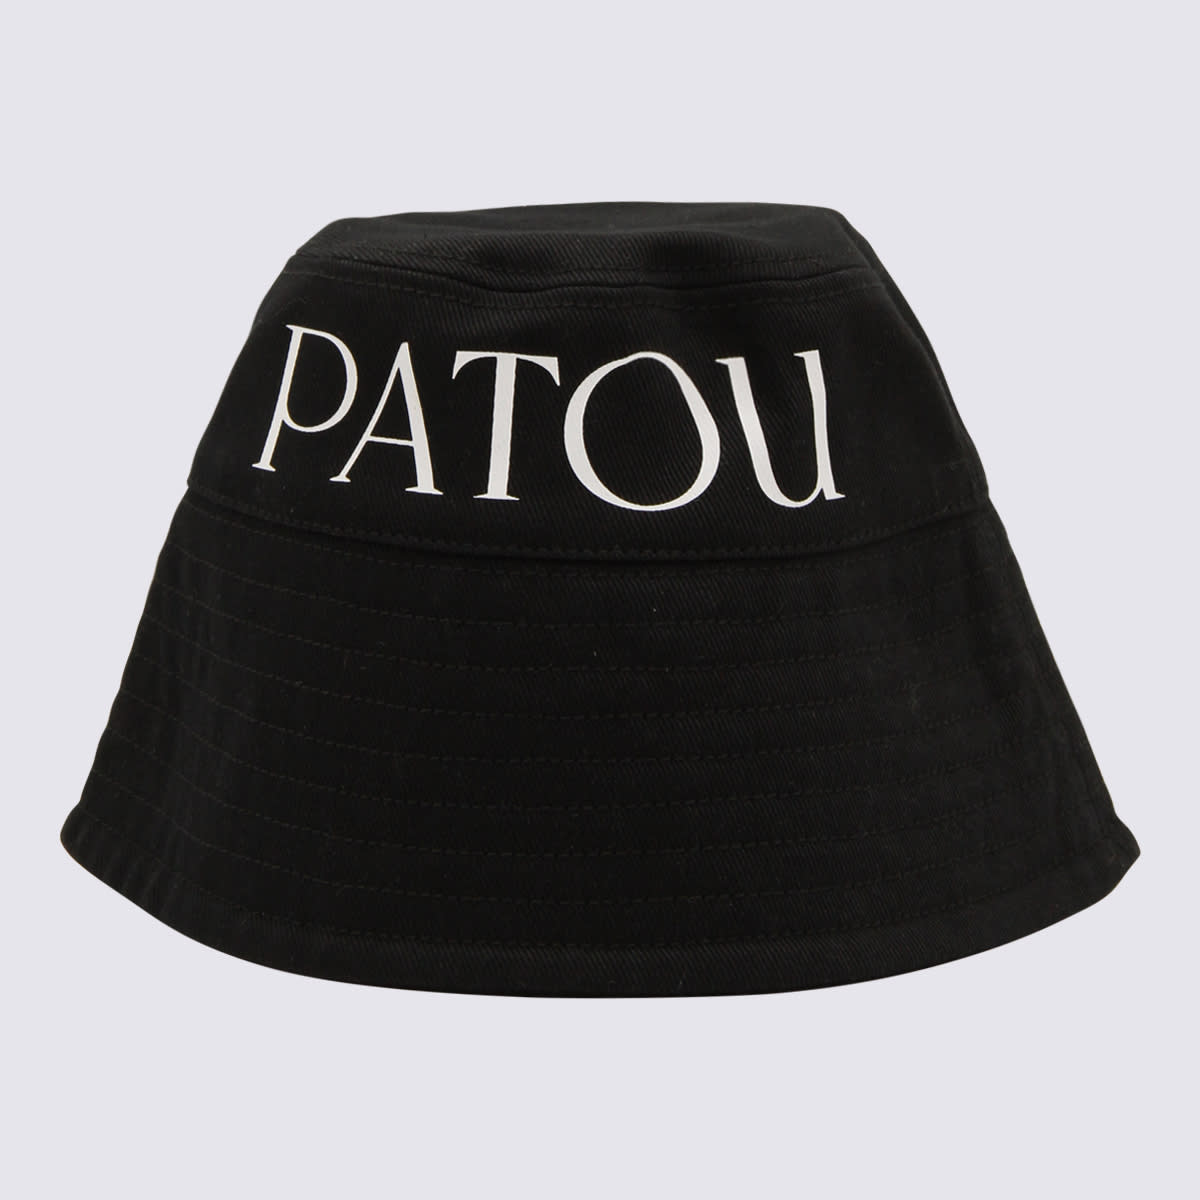 Patou Black And White Cotton Bucket Hat